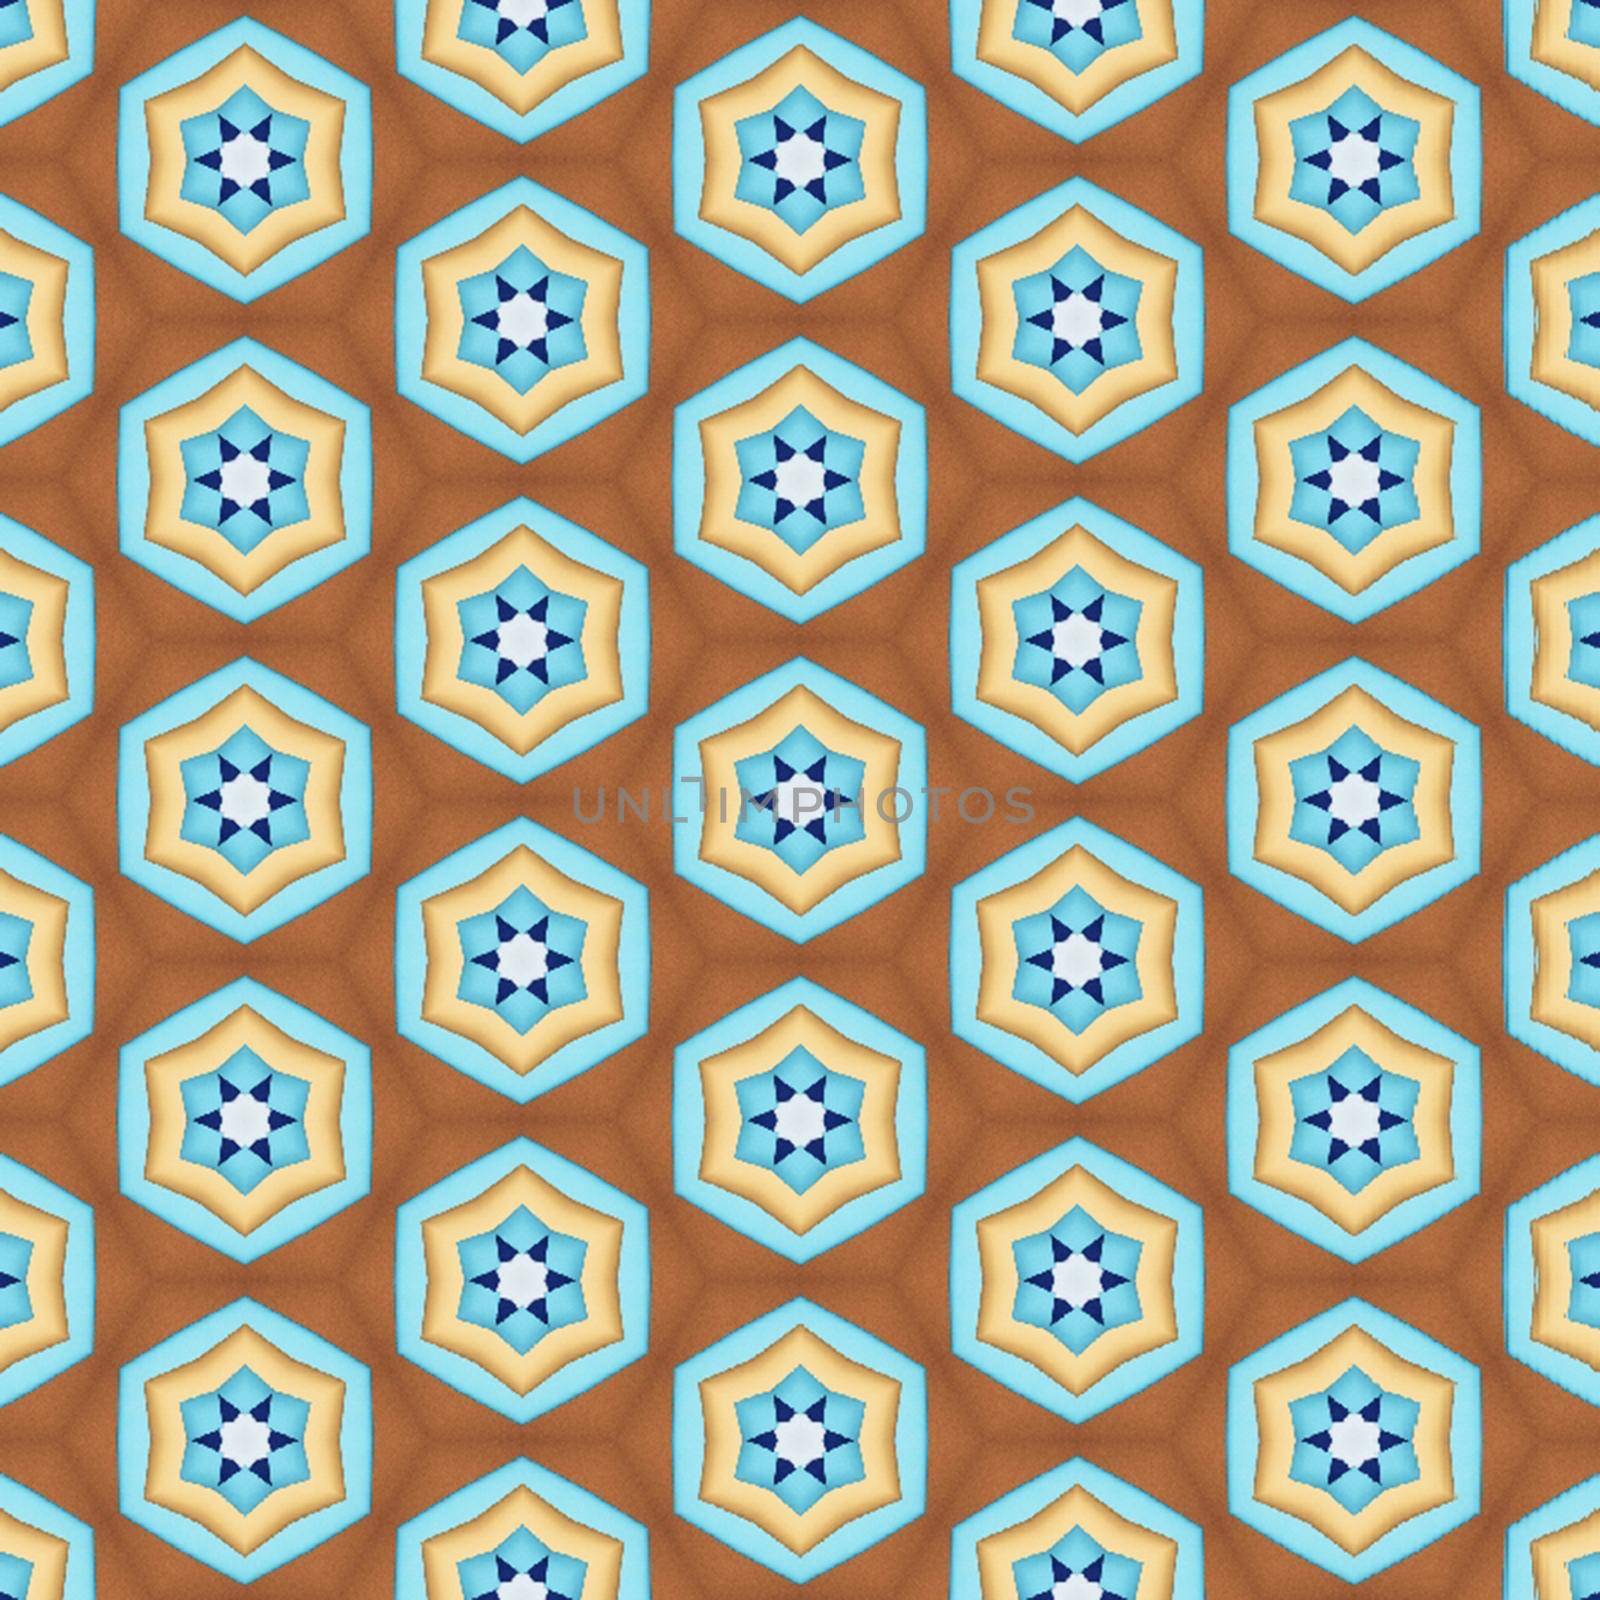 Pattern Design by TravelSync27